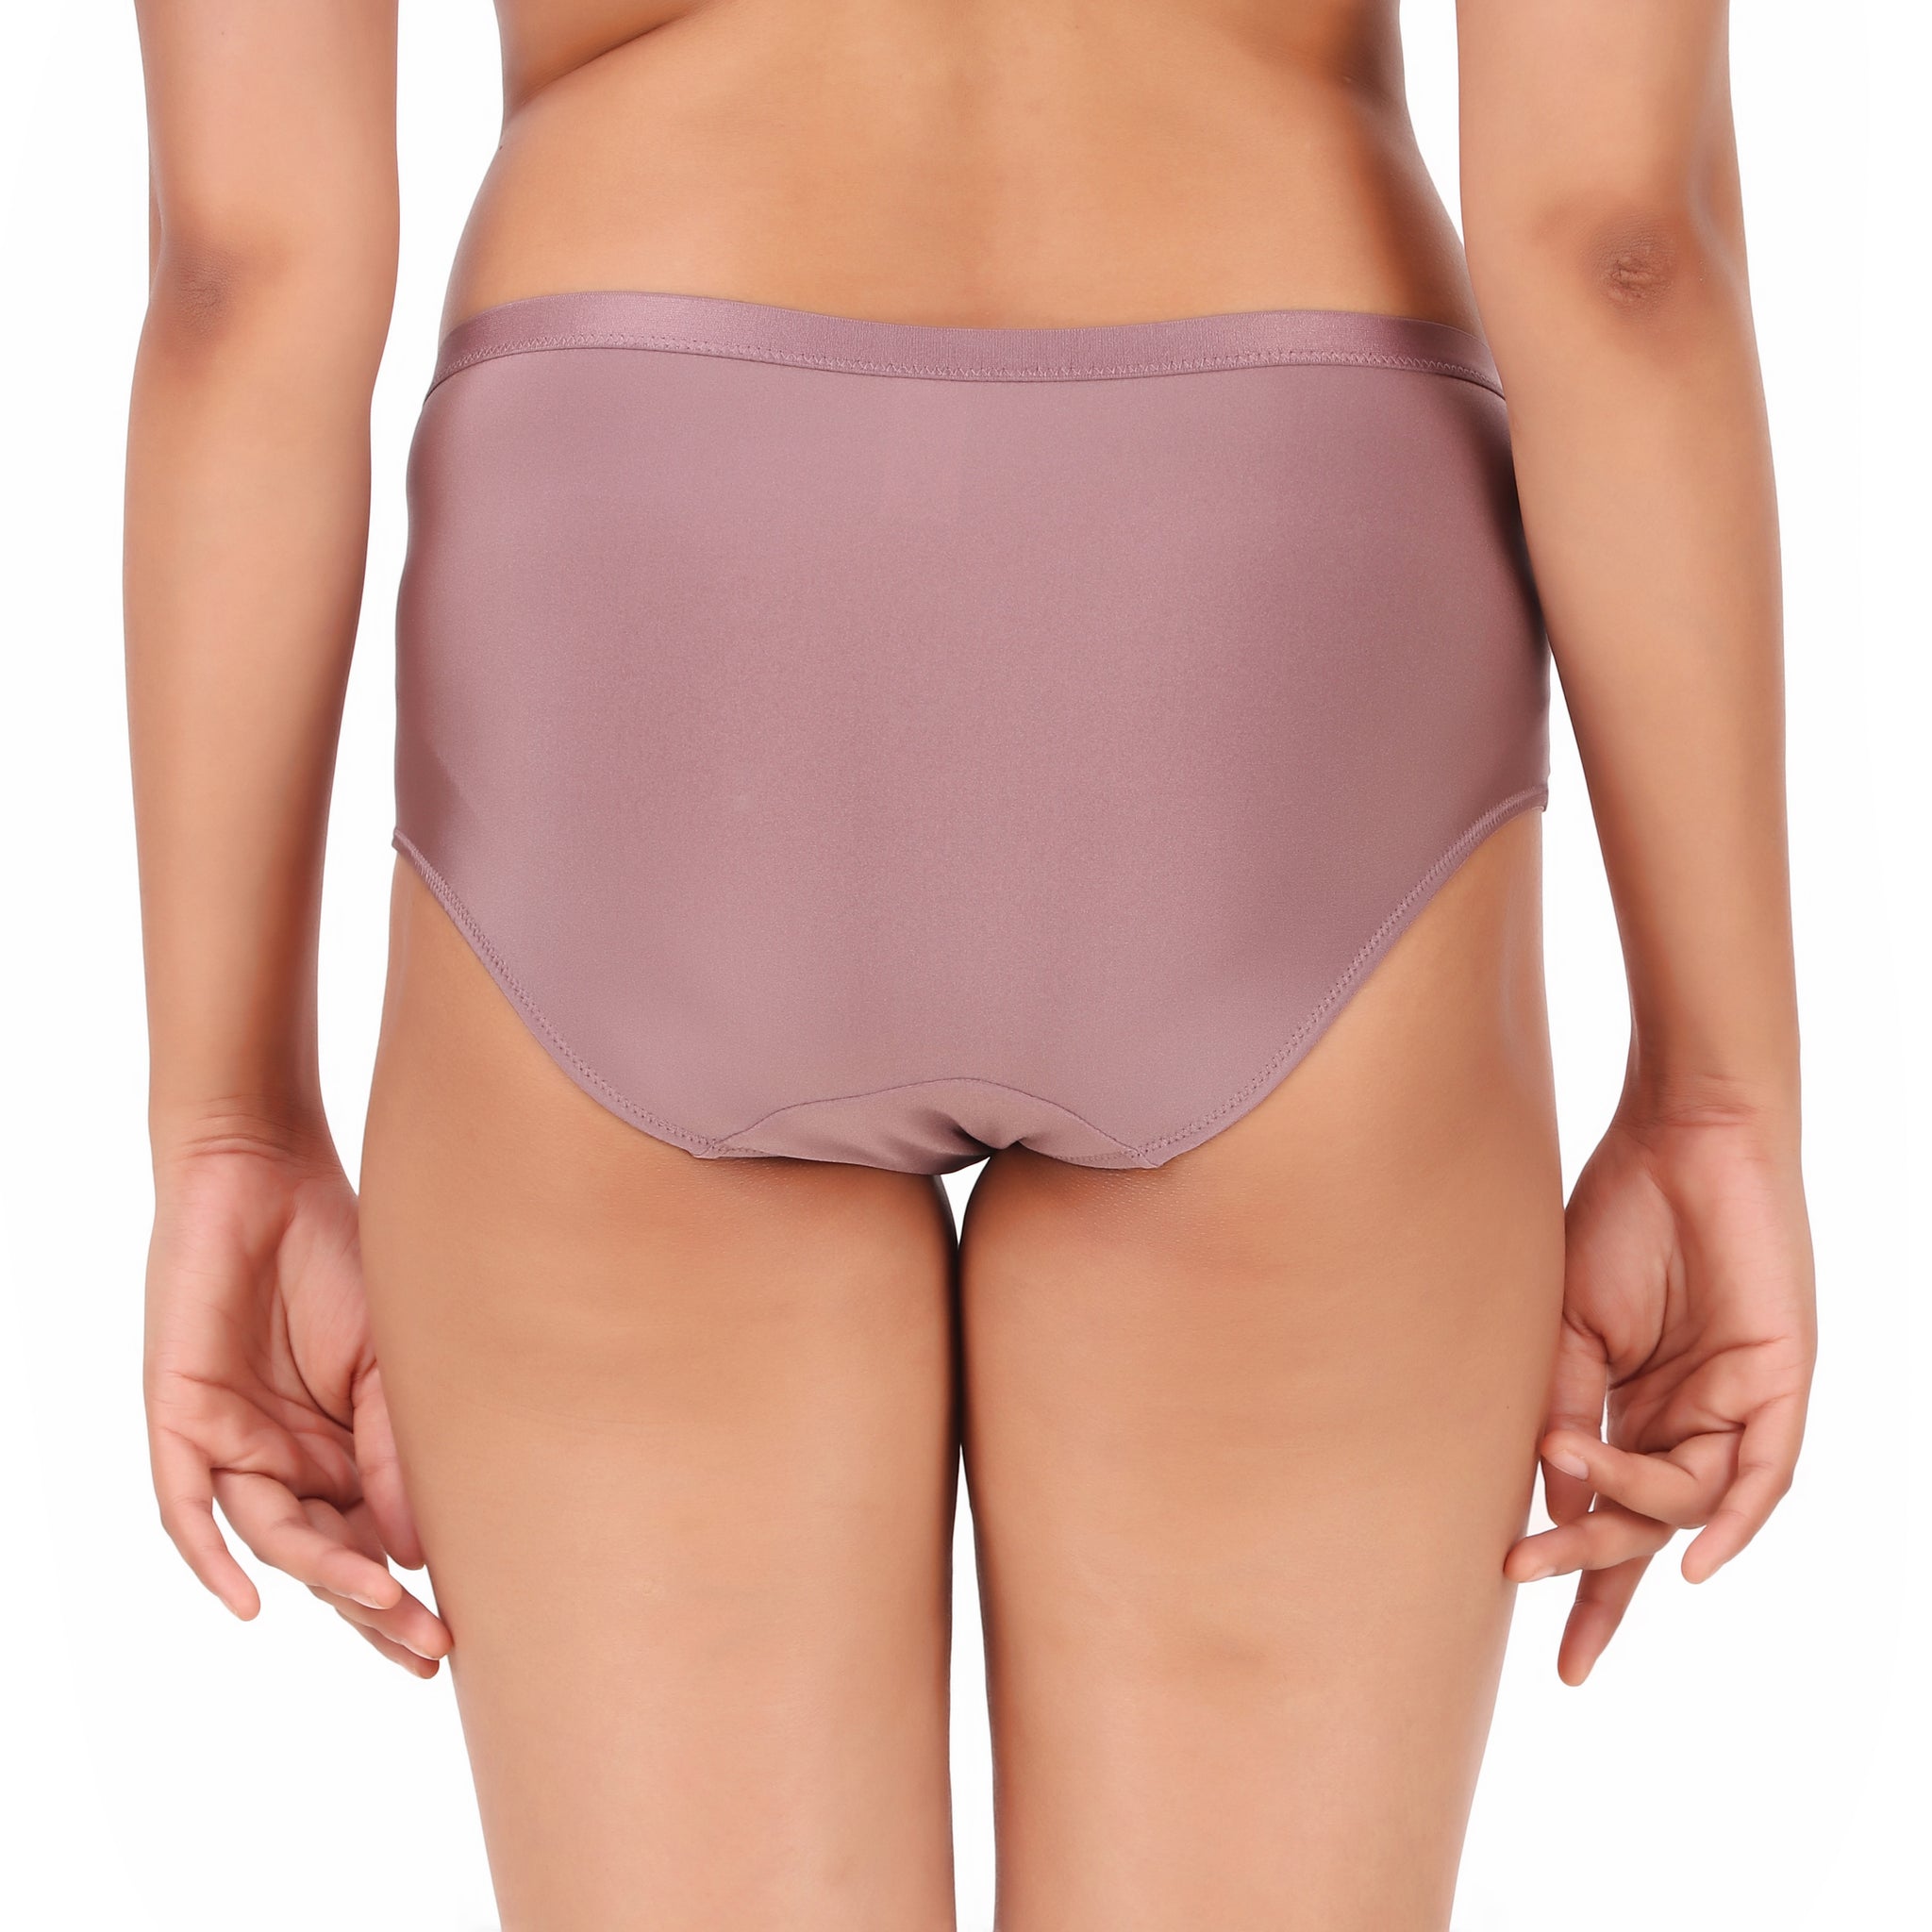 AMANTE PPK43105 Inner Elastic Waistband Hipster Panty (Pack of 3)